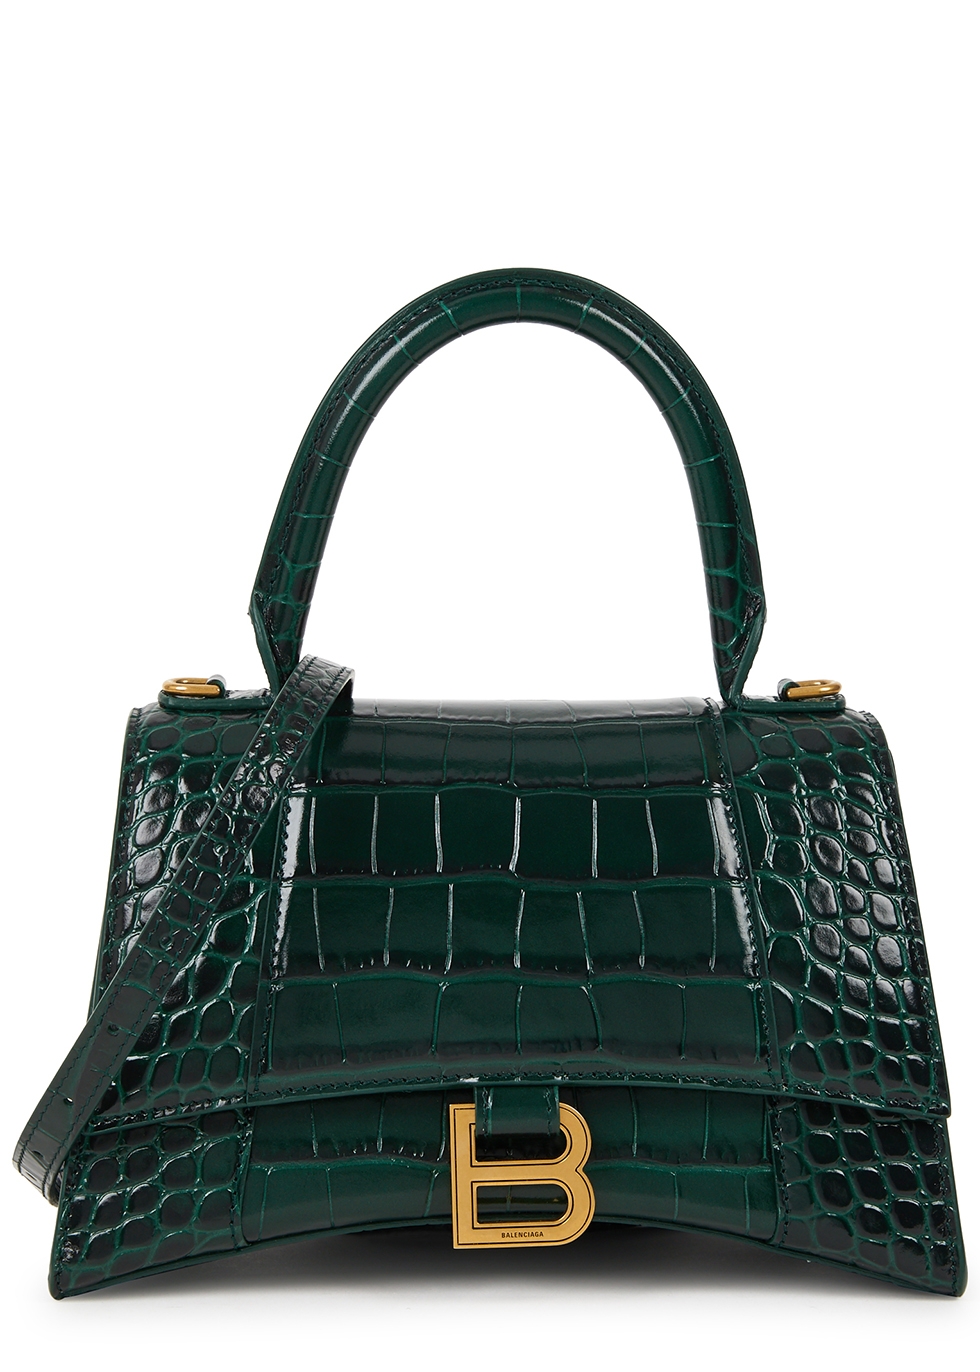 Balenciaga Dark Hunter Green Leather City Bag  I MISS YOU VINTAGE